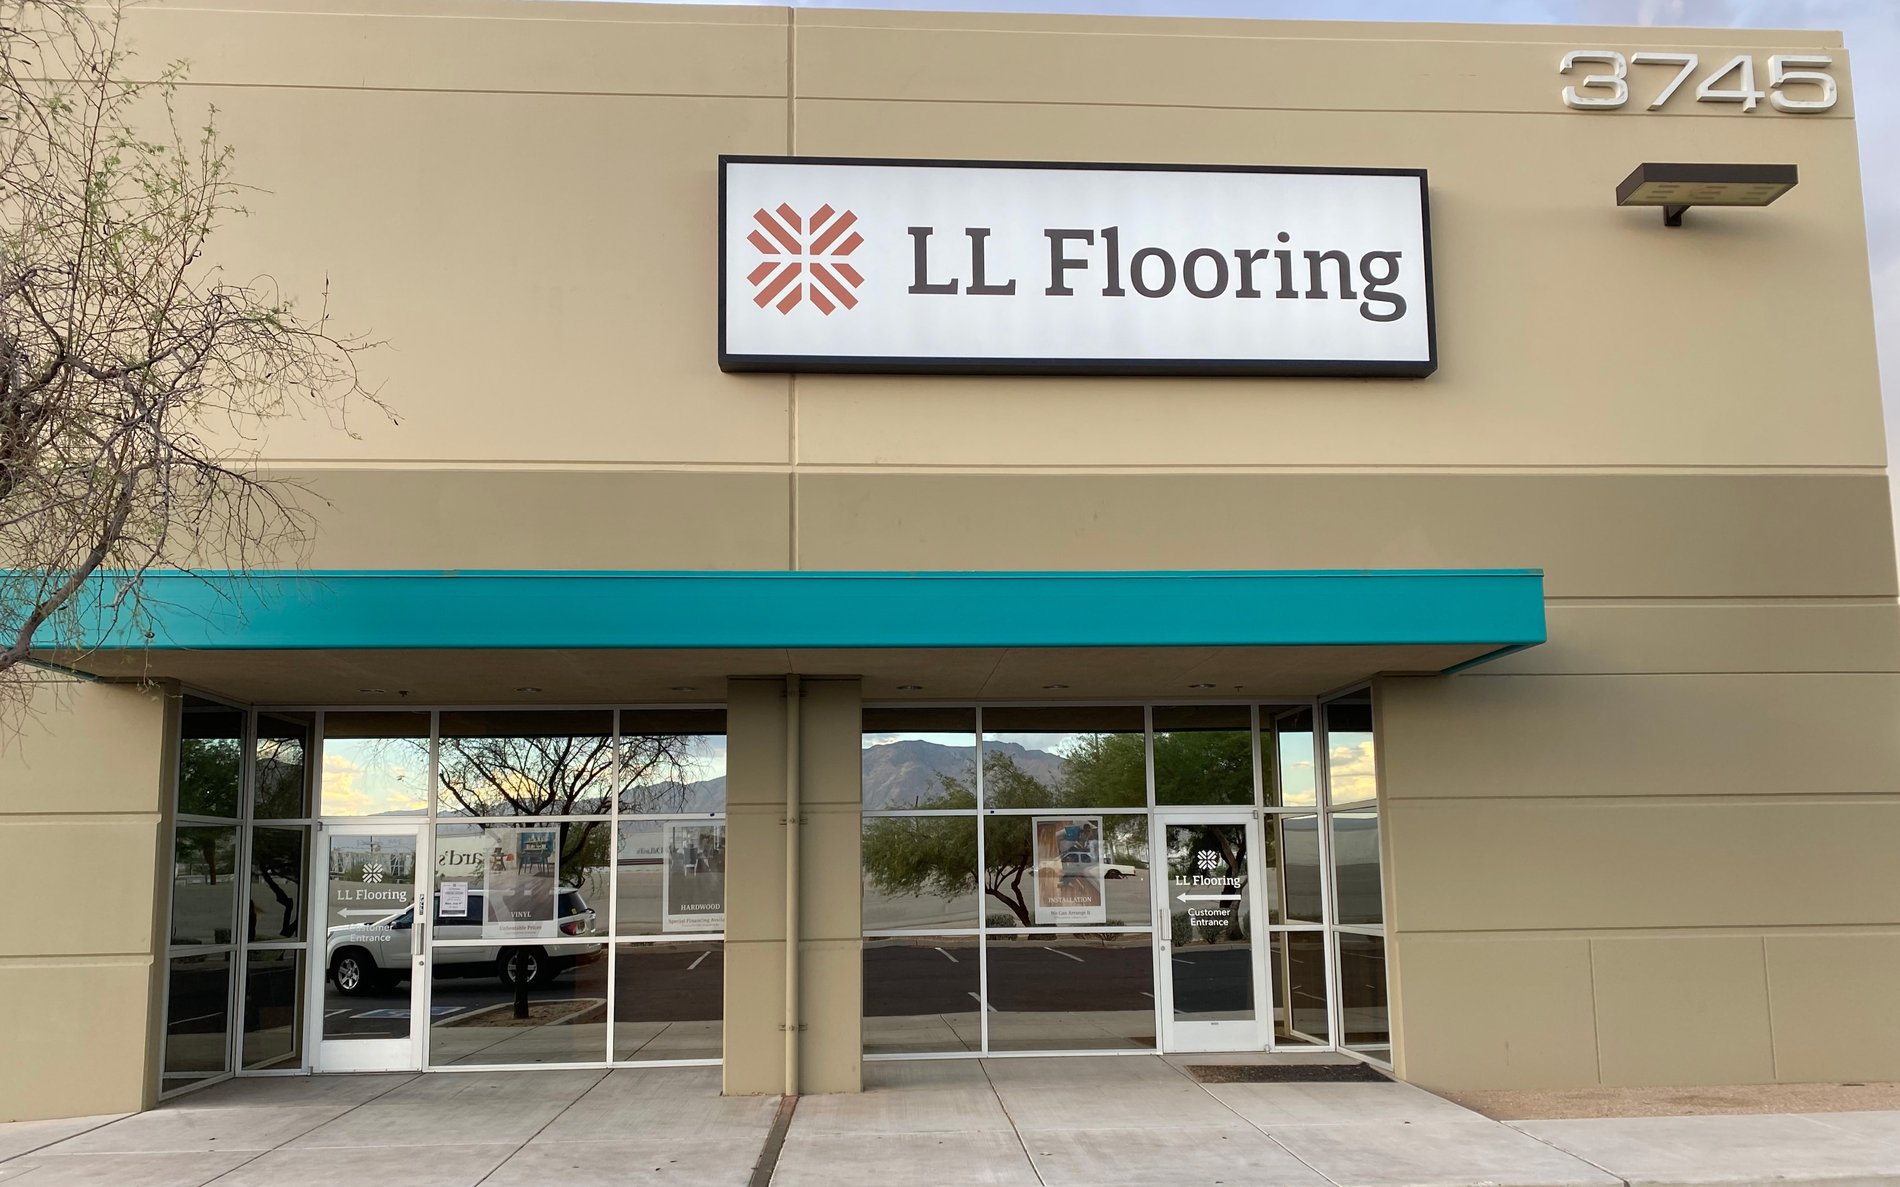 LL Flooring #1085 Tucson | 3745 N. I-10 EB Frontage Road | Storefront